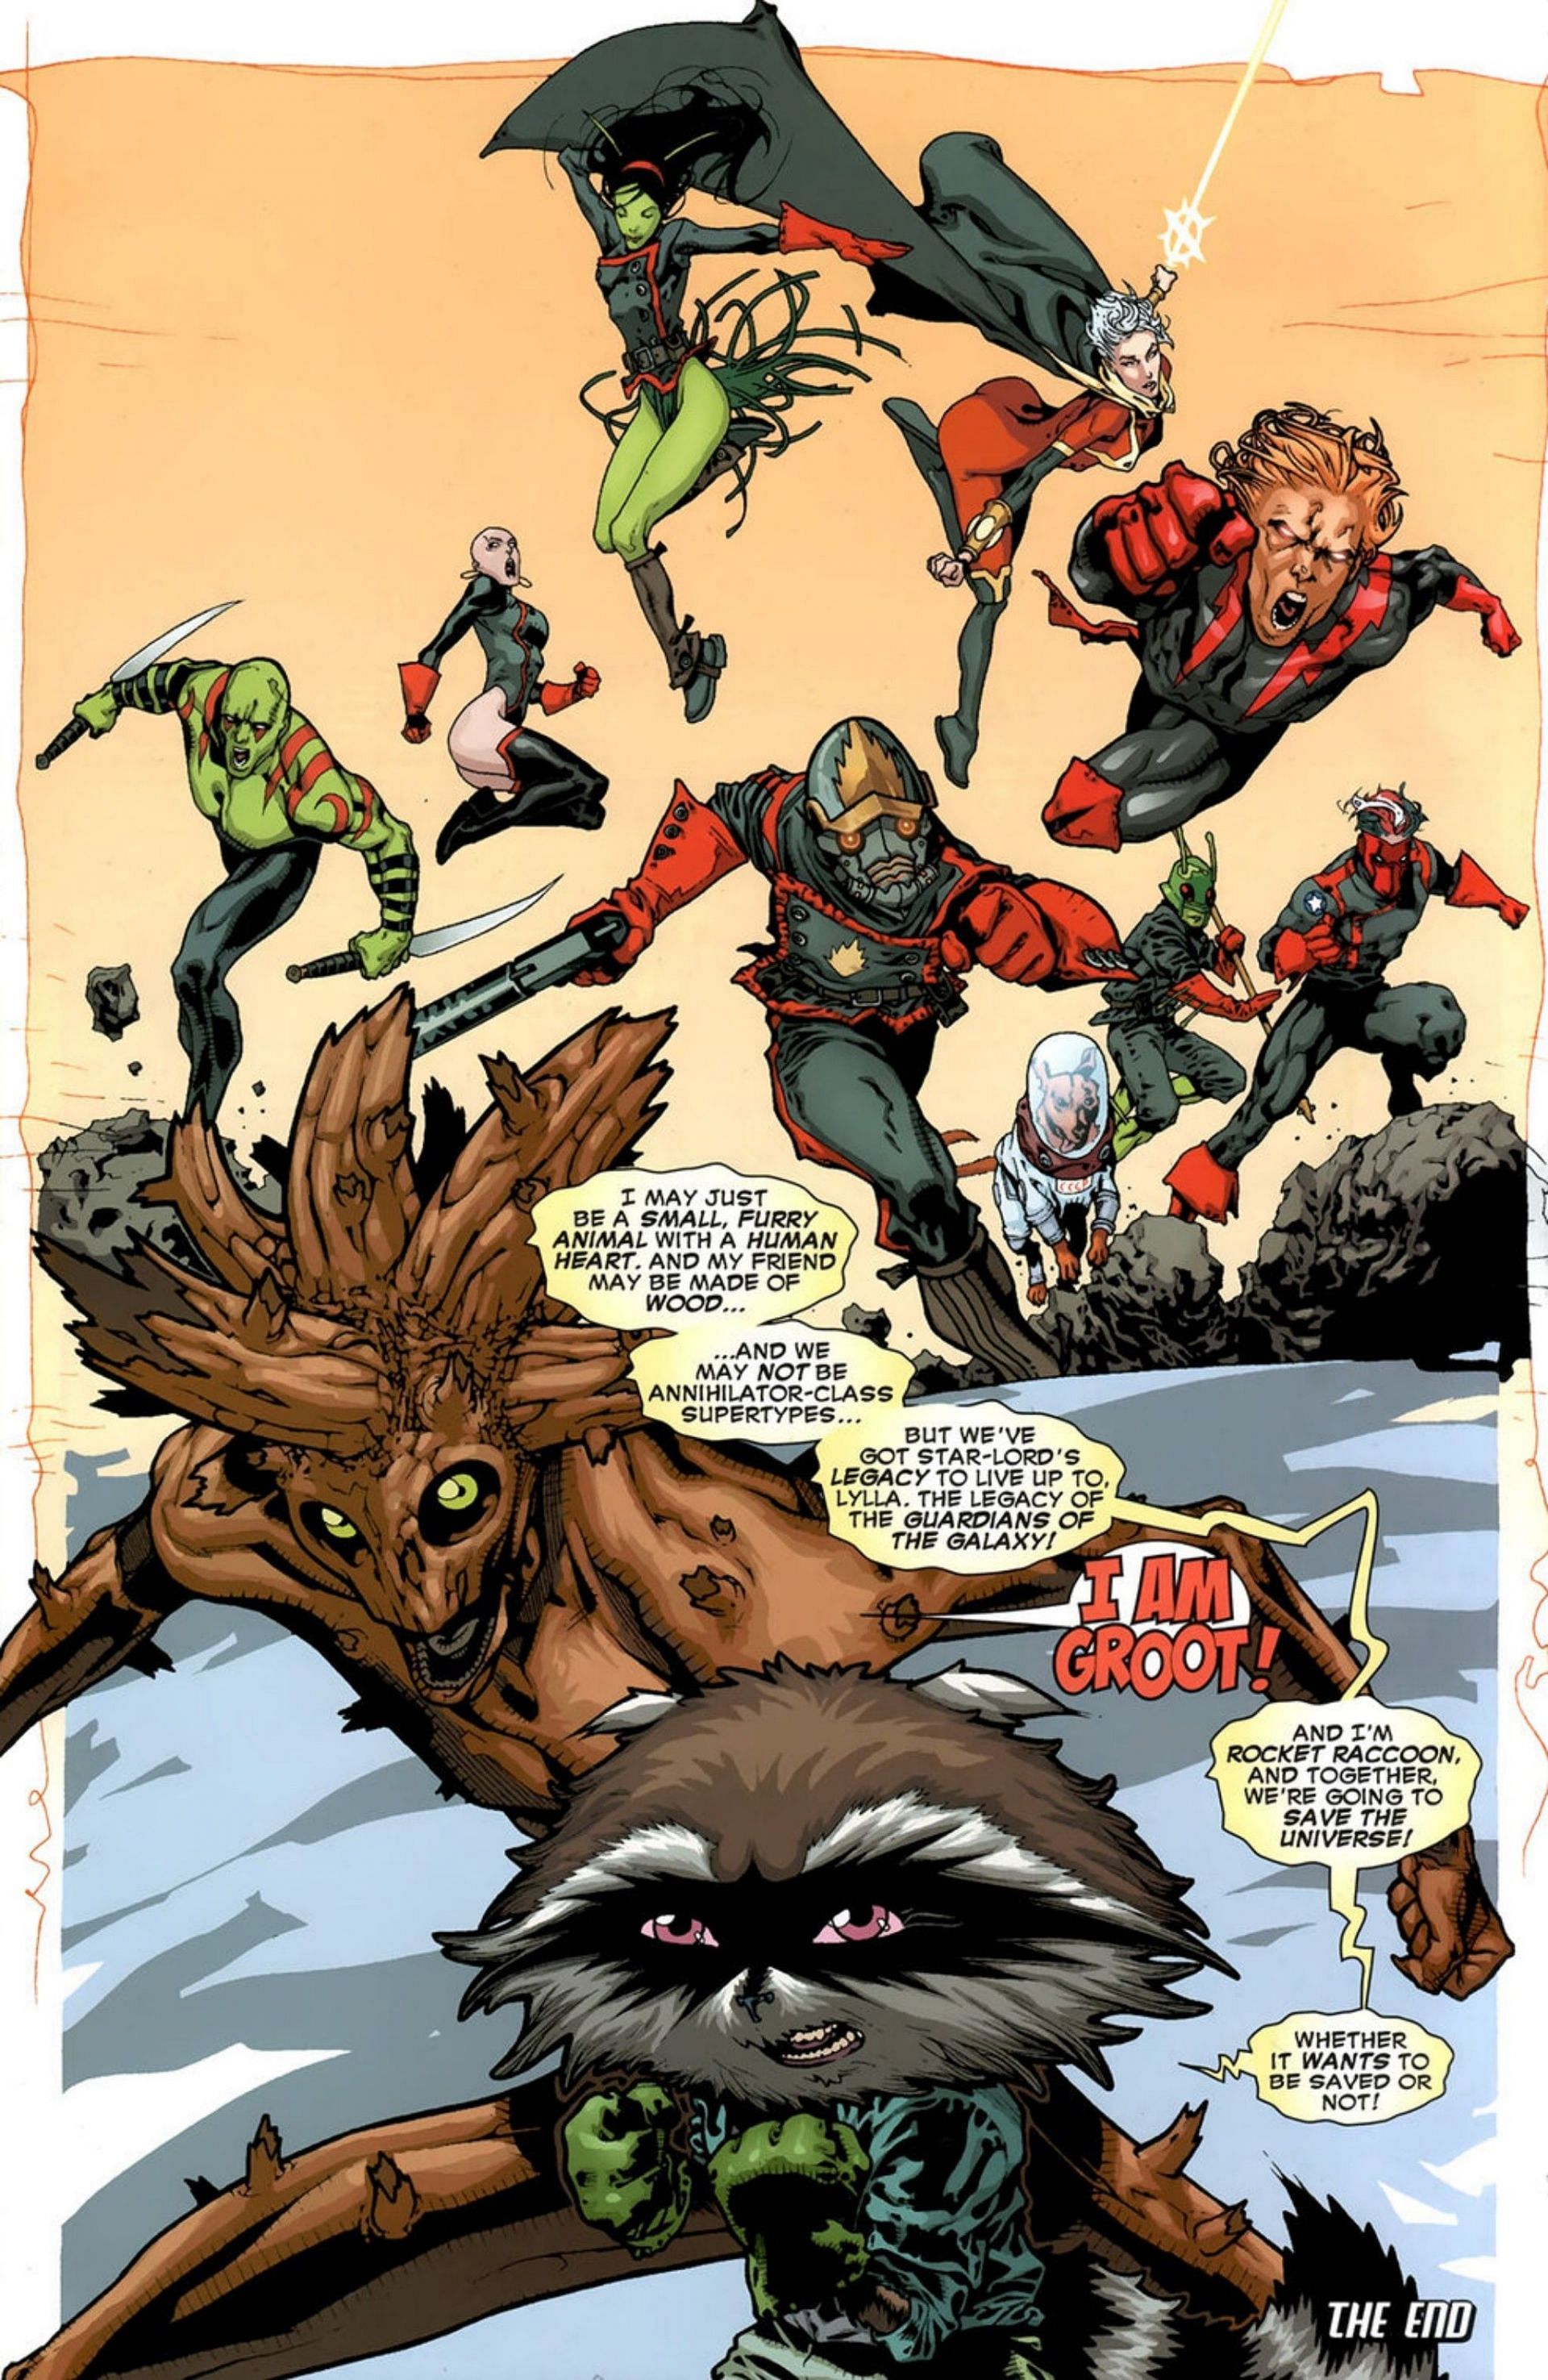 Groot fighting alongside Guardians of the Galaxy (Image via Marvel Comics)